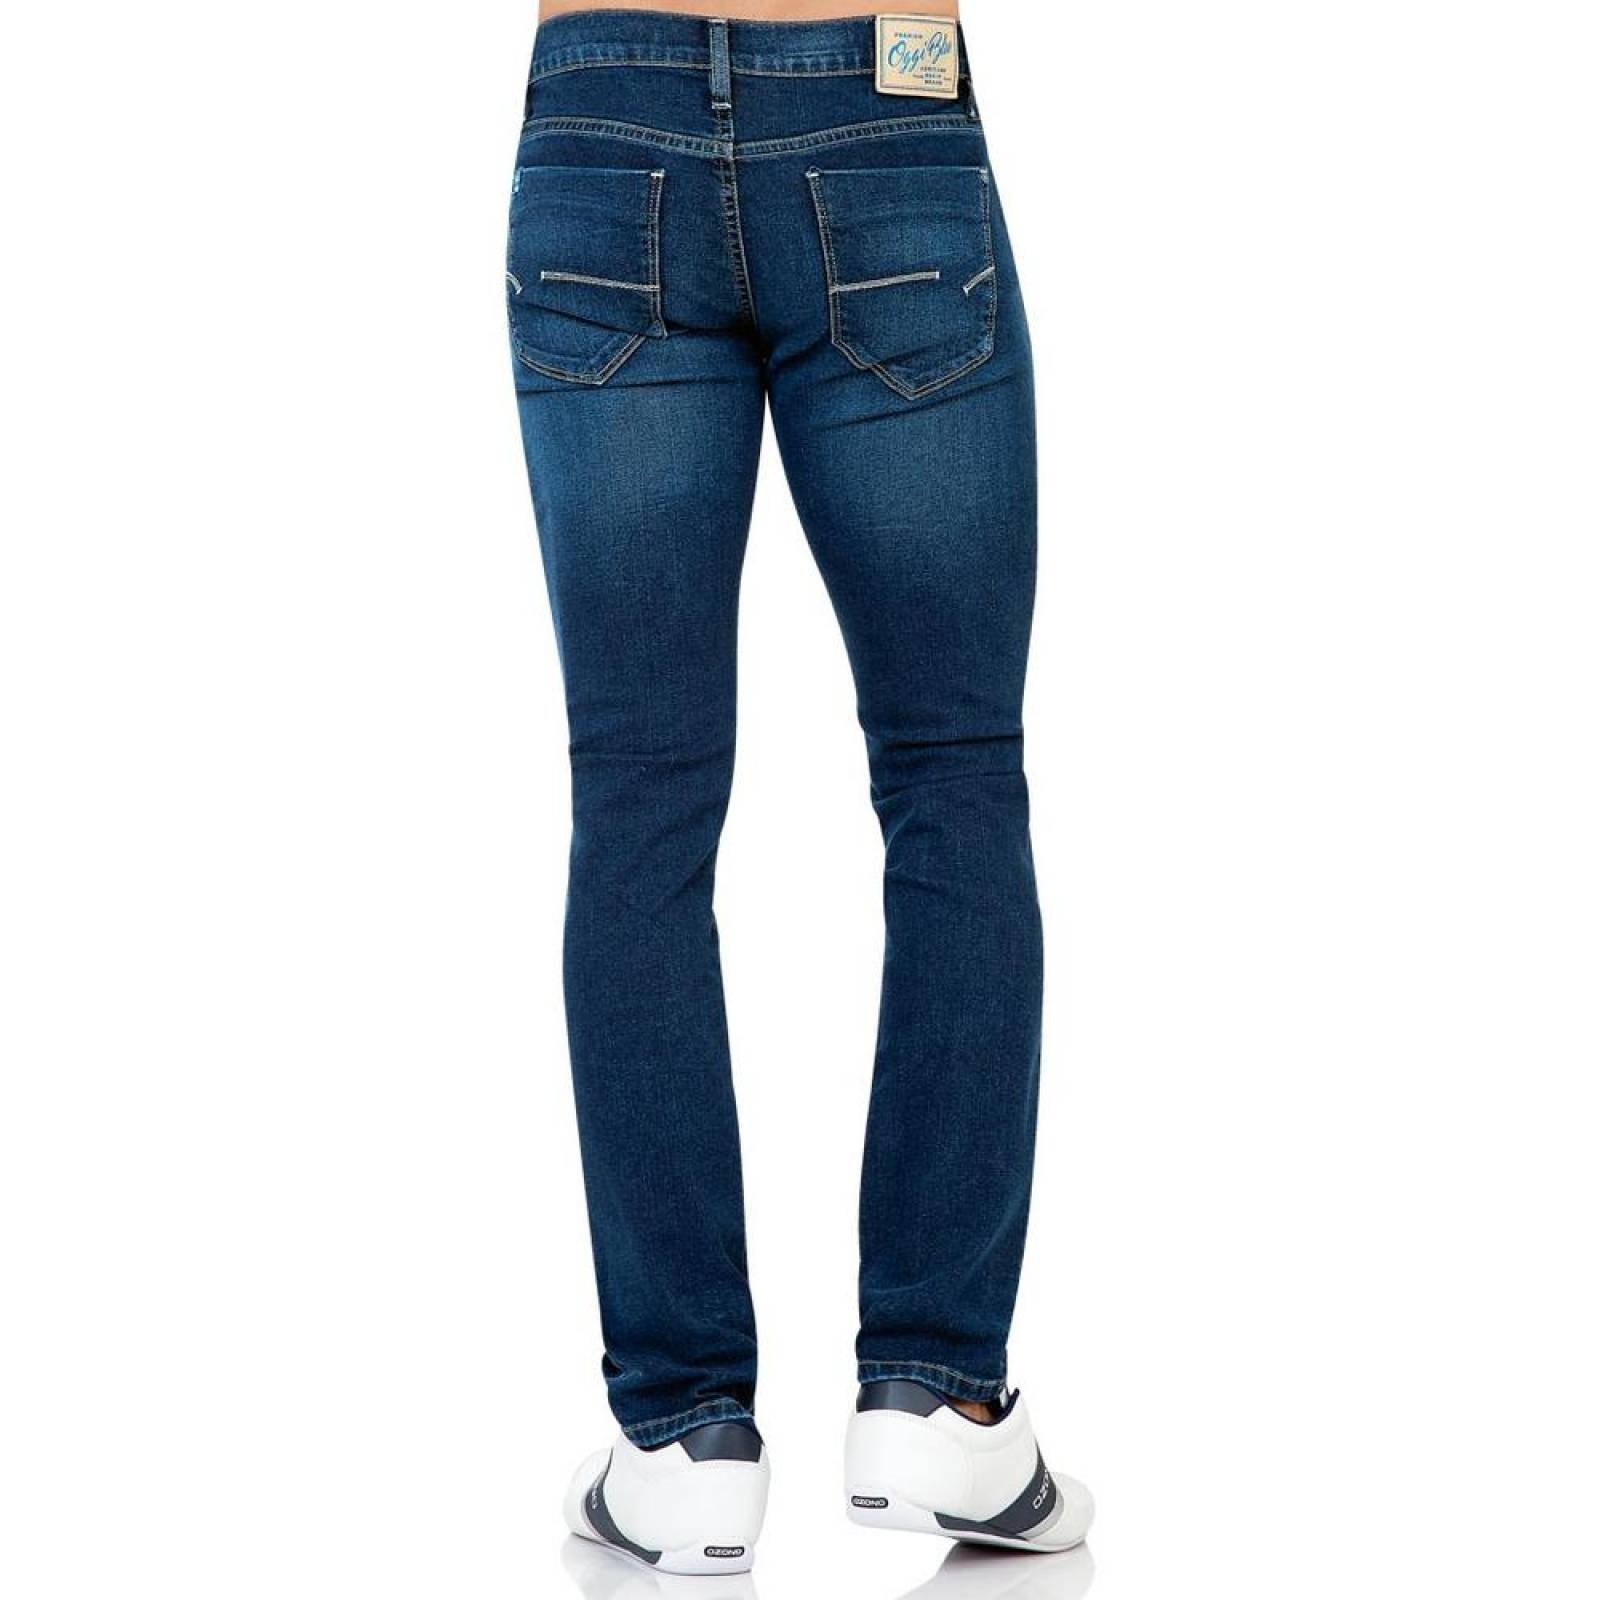 Jeans Oggi Jeans Hombre Azul Mezclilla-Stretch Risk 